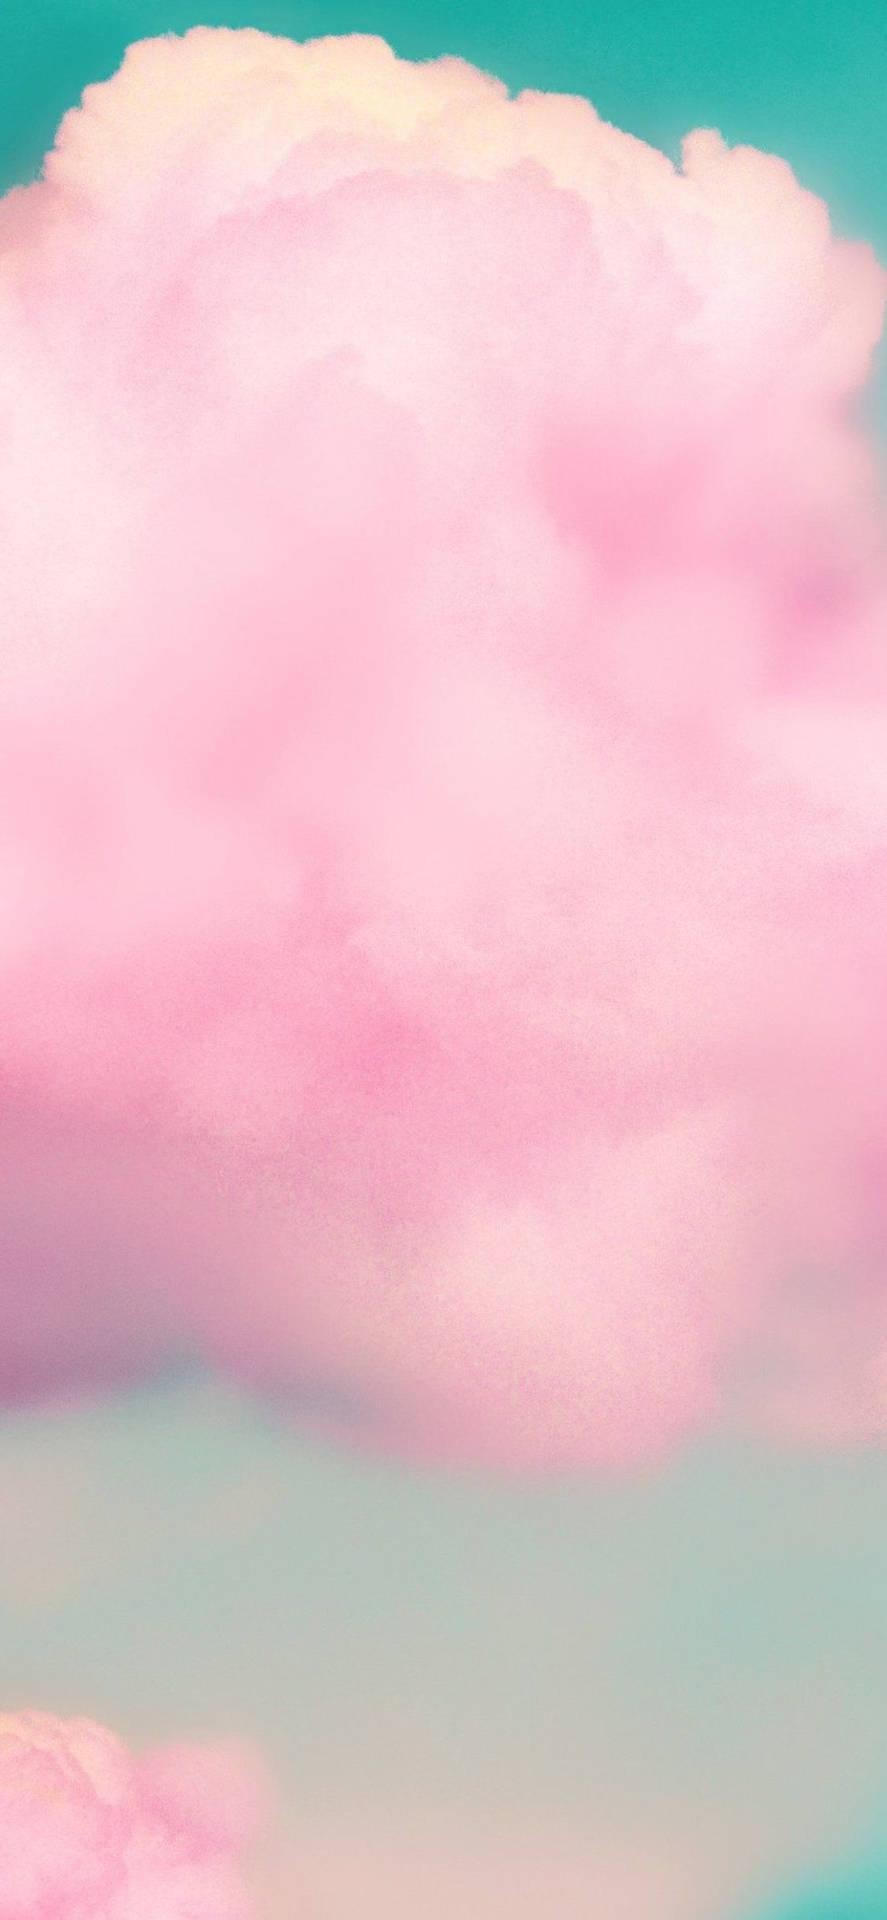 Cloudy Pink 3D iPhone Wallpaper